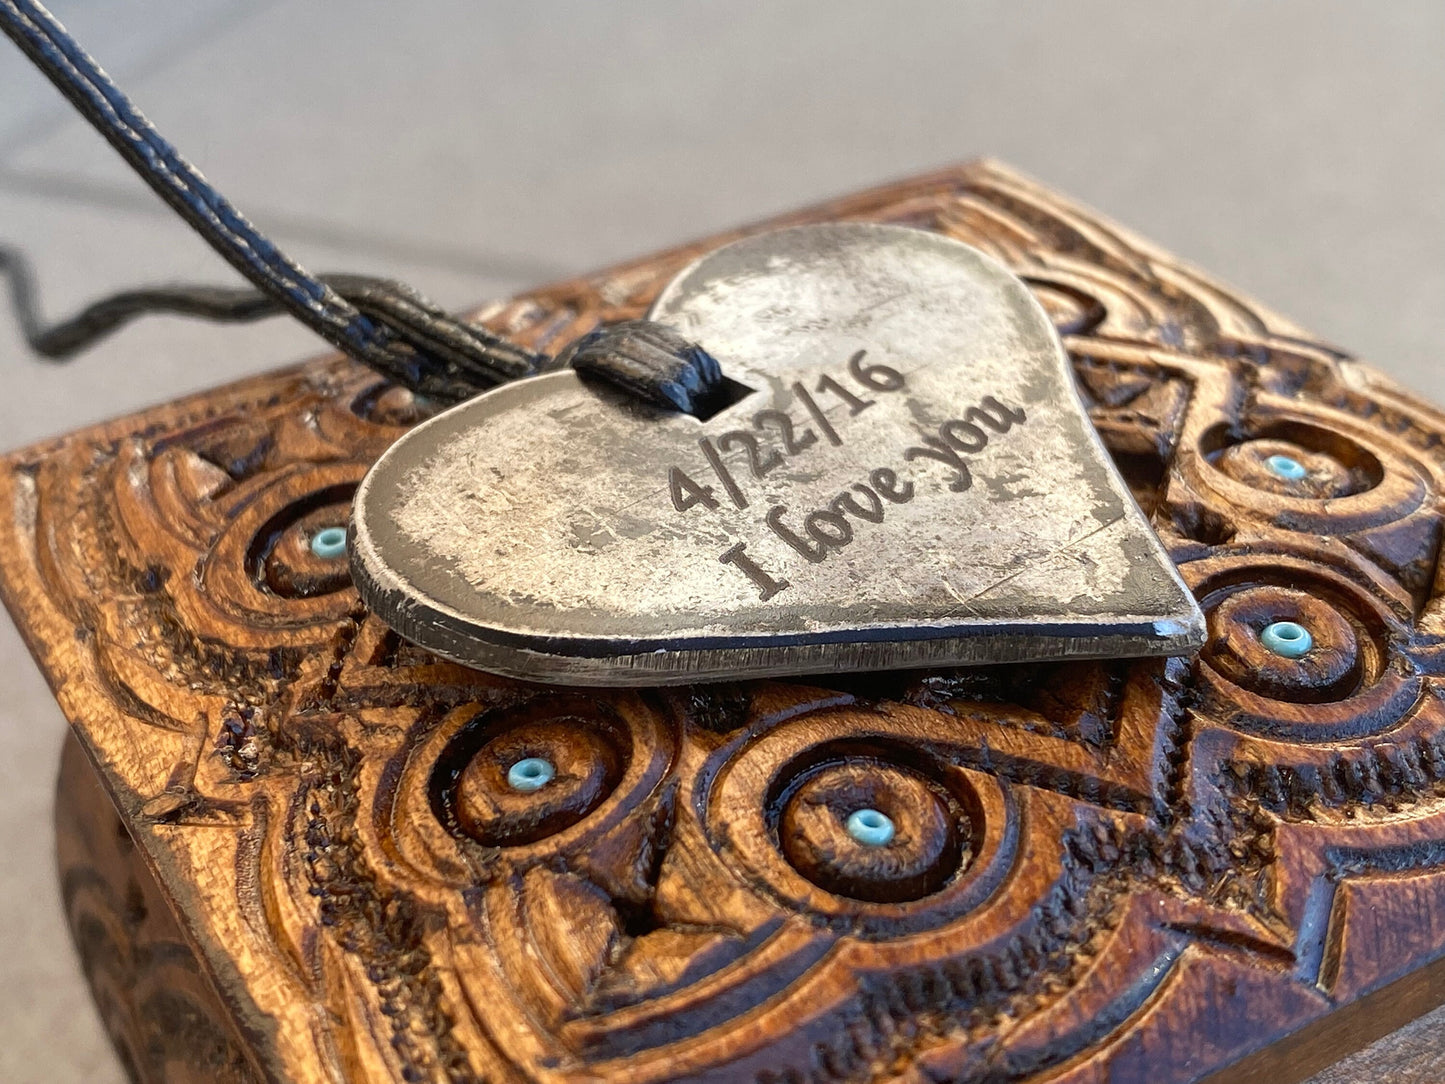 Personalized gift, iron gift, 6th anniversary, iron anniversary, iron heart, iron necklace,necklace,iron pendant,iron jewelry,iron gift idea